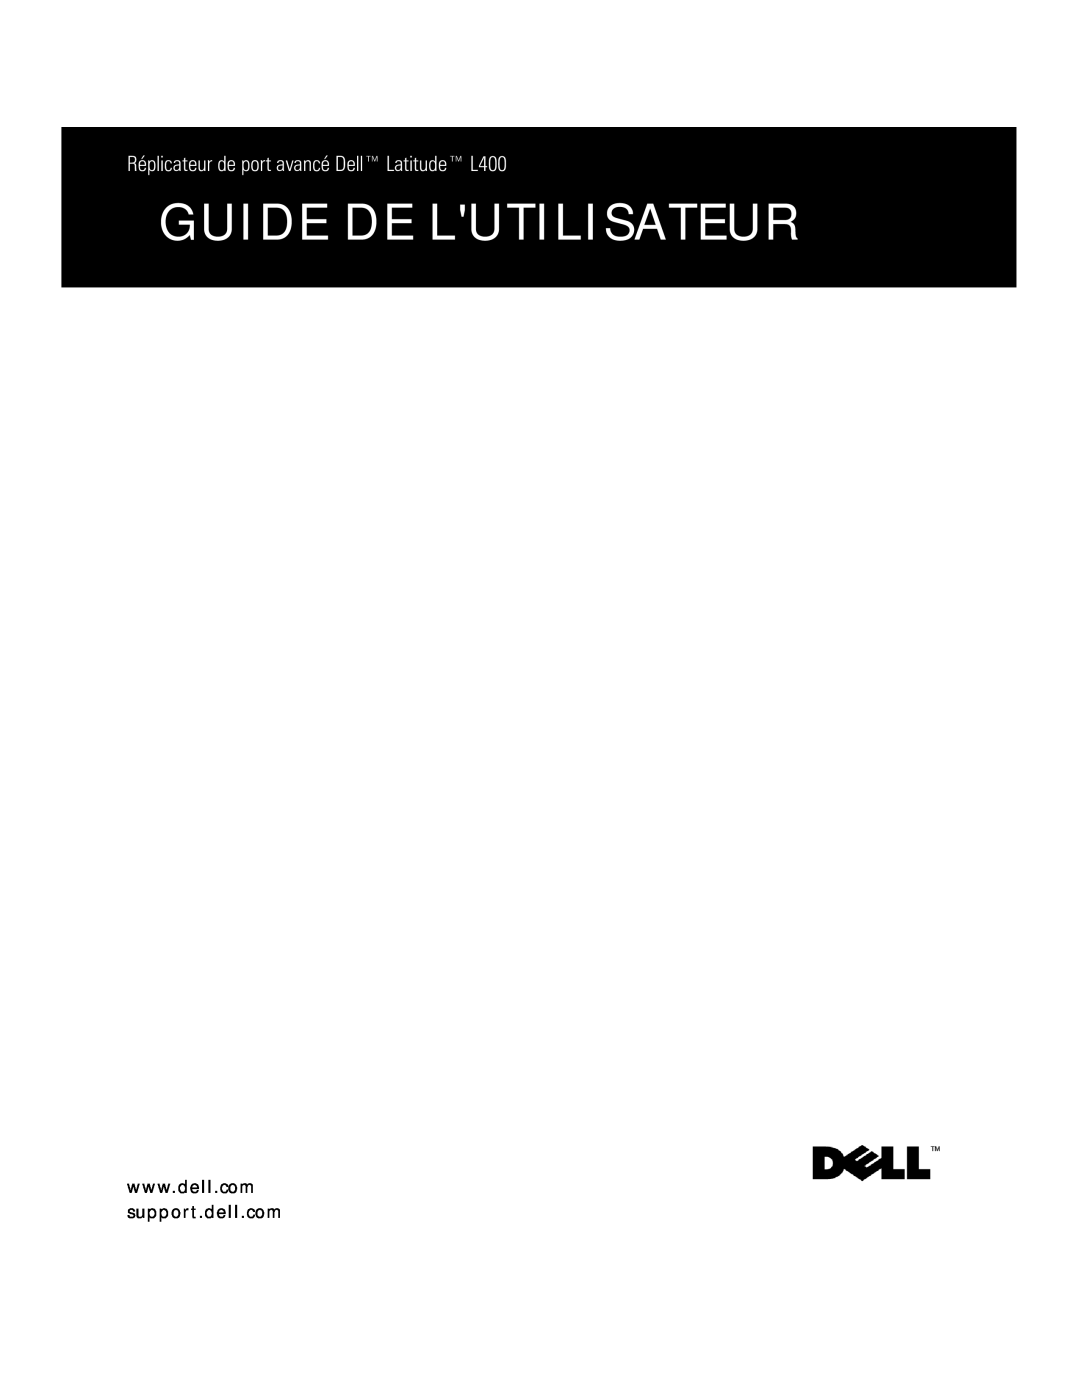 Dell L400 manual Guide De Lutilisateur, 5pSOLFDWHXUGHSRUWDYDQFpHOOŒ/DWLWXGHŒ 